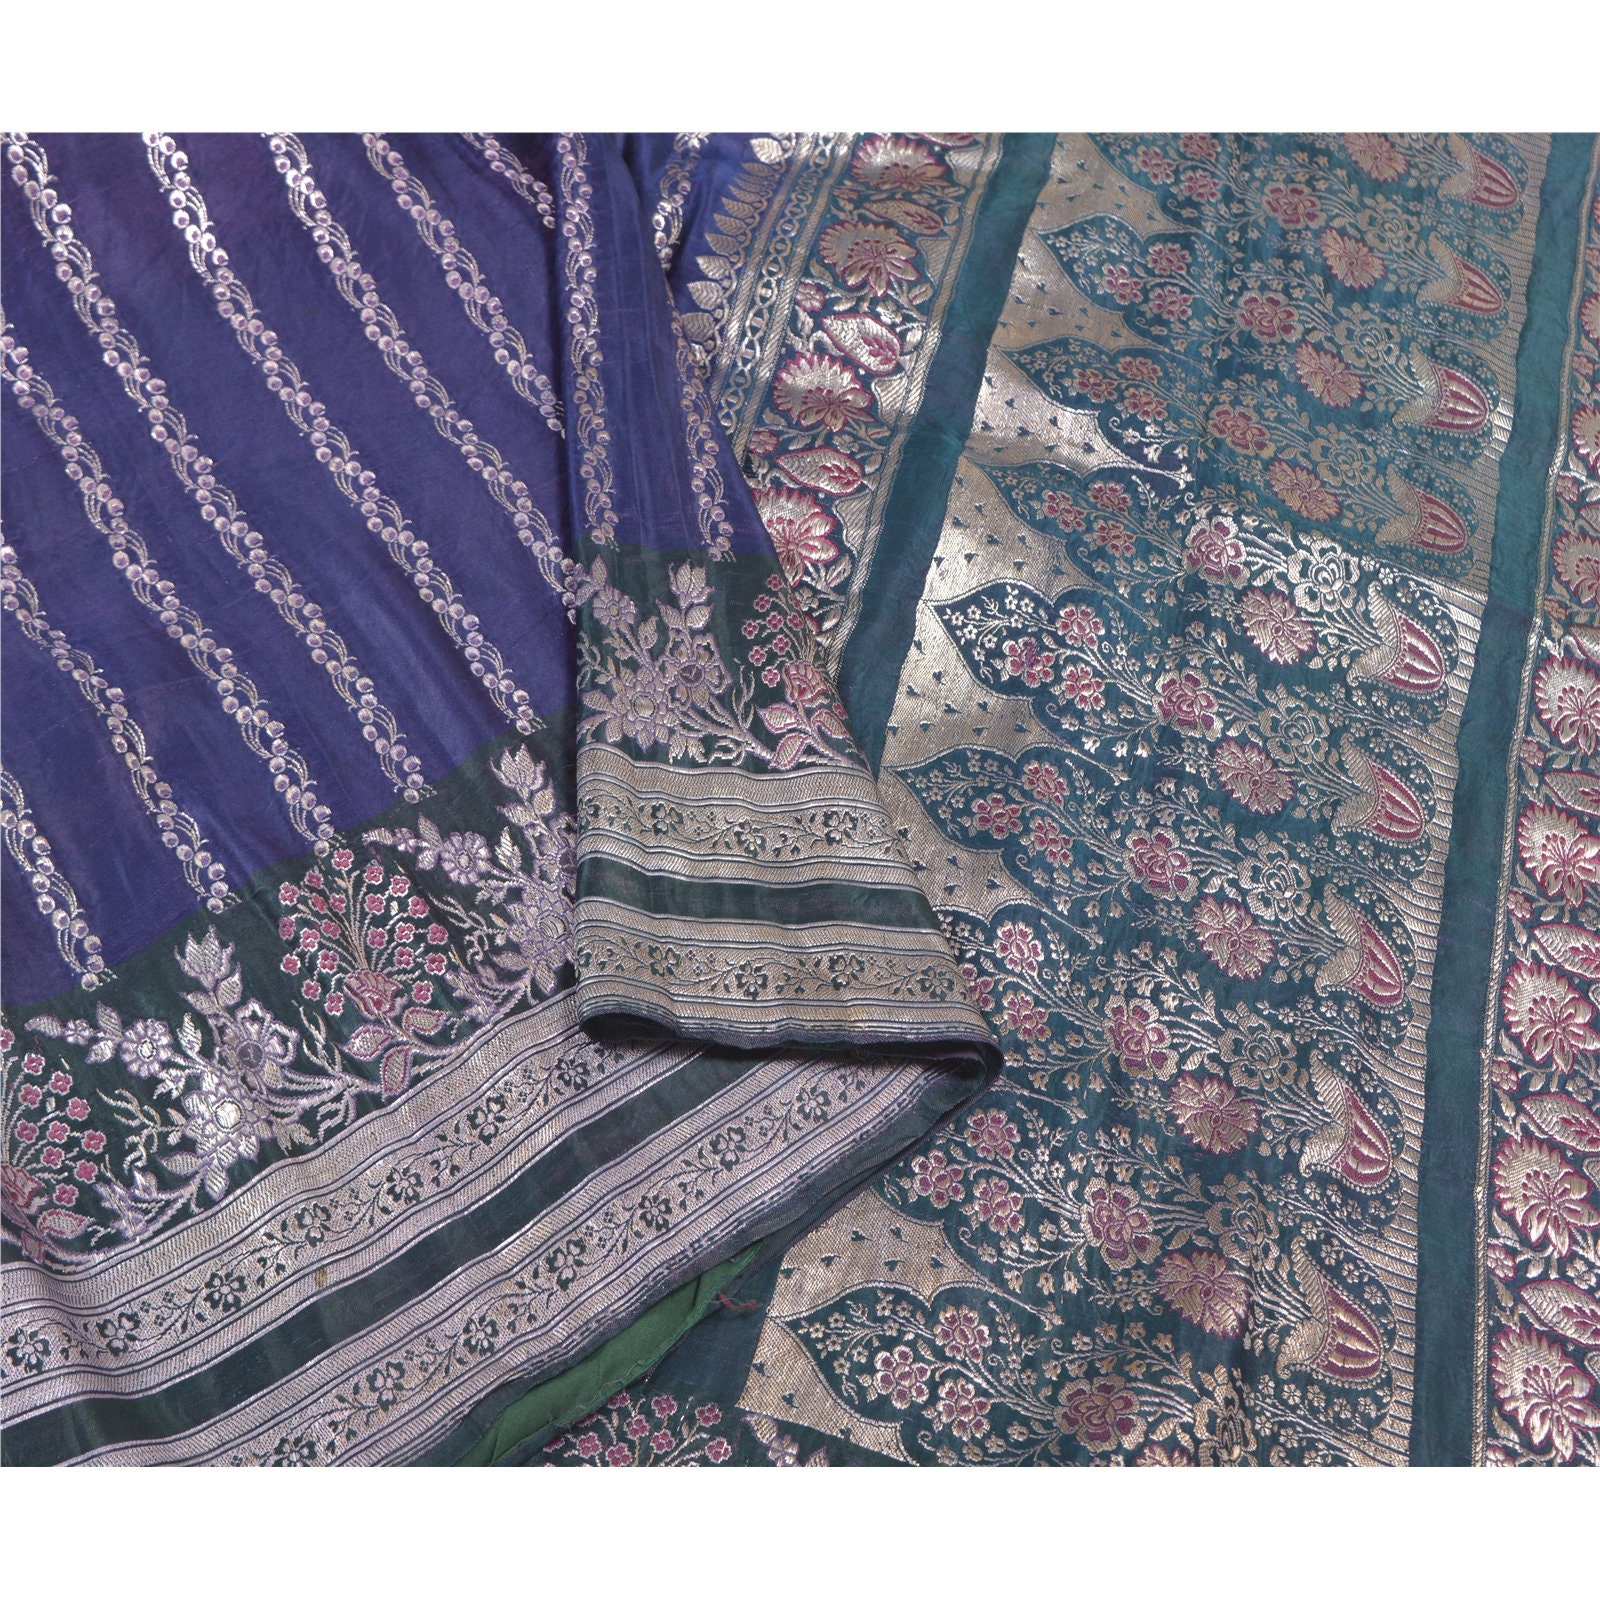 Vintage Saree 100% Pure Georgette Silk Floral Printed Woven Sari Craft Fabric